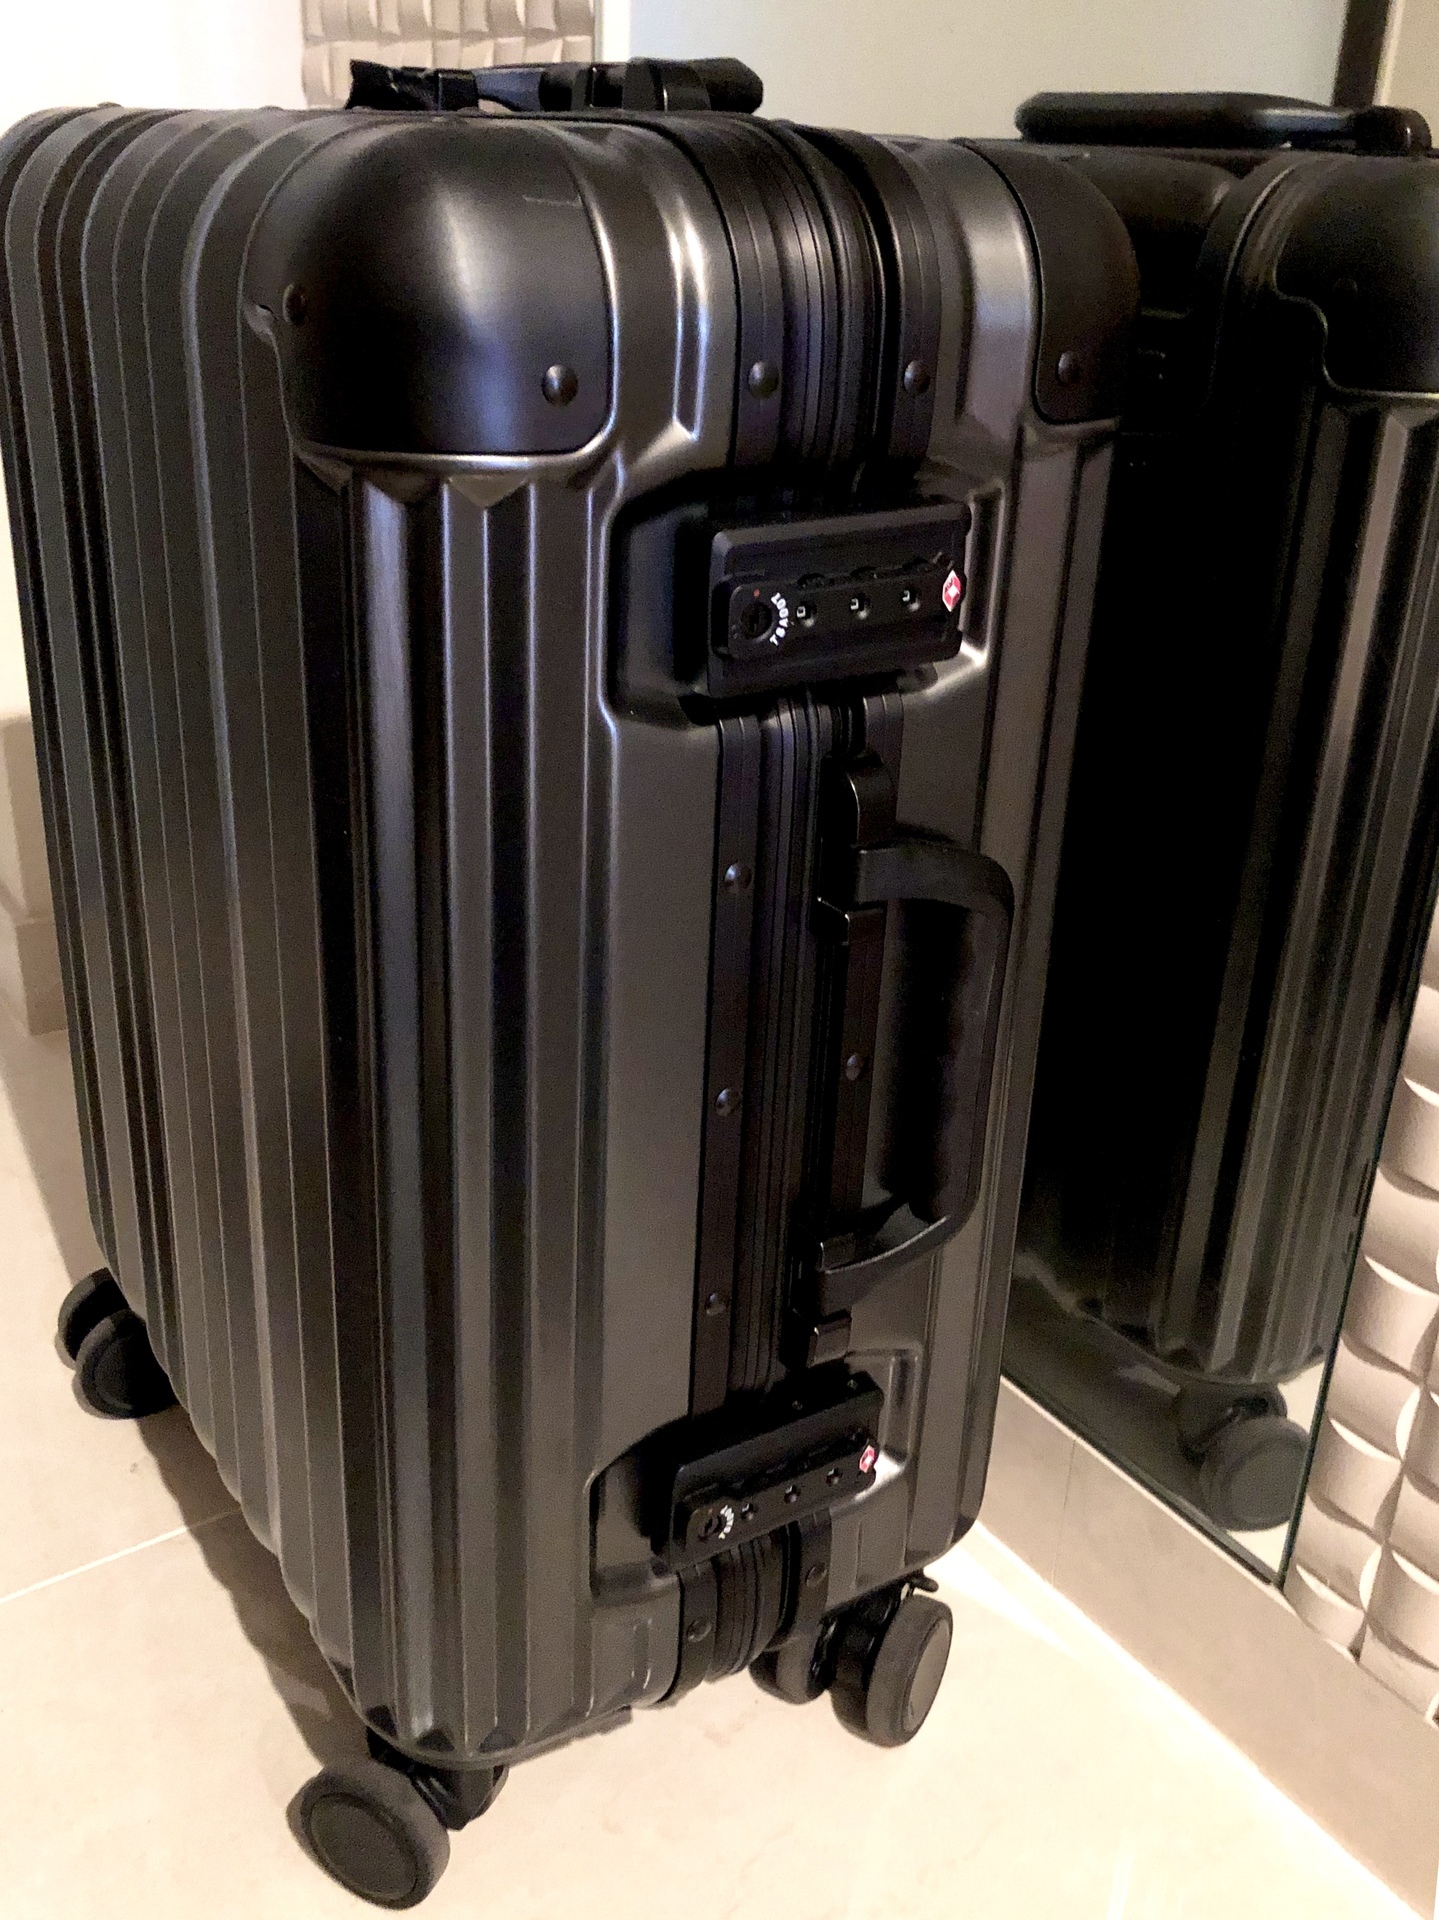 RICARDO BEVERLY HILLS 機内持ち込み可能スーツケースを購入